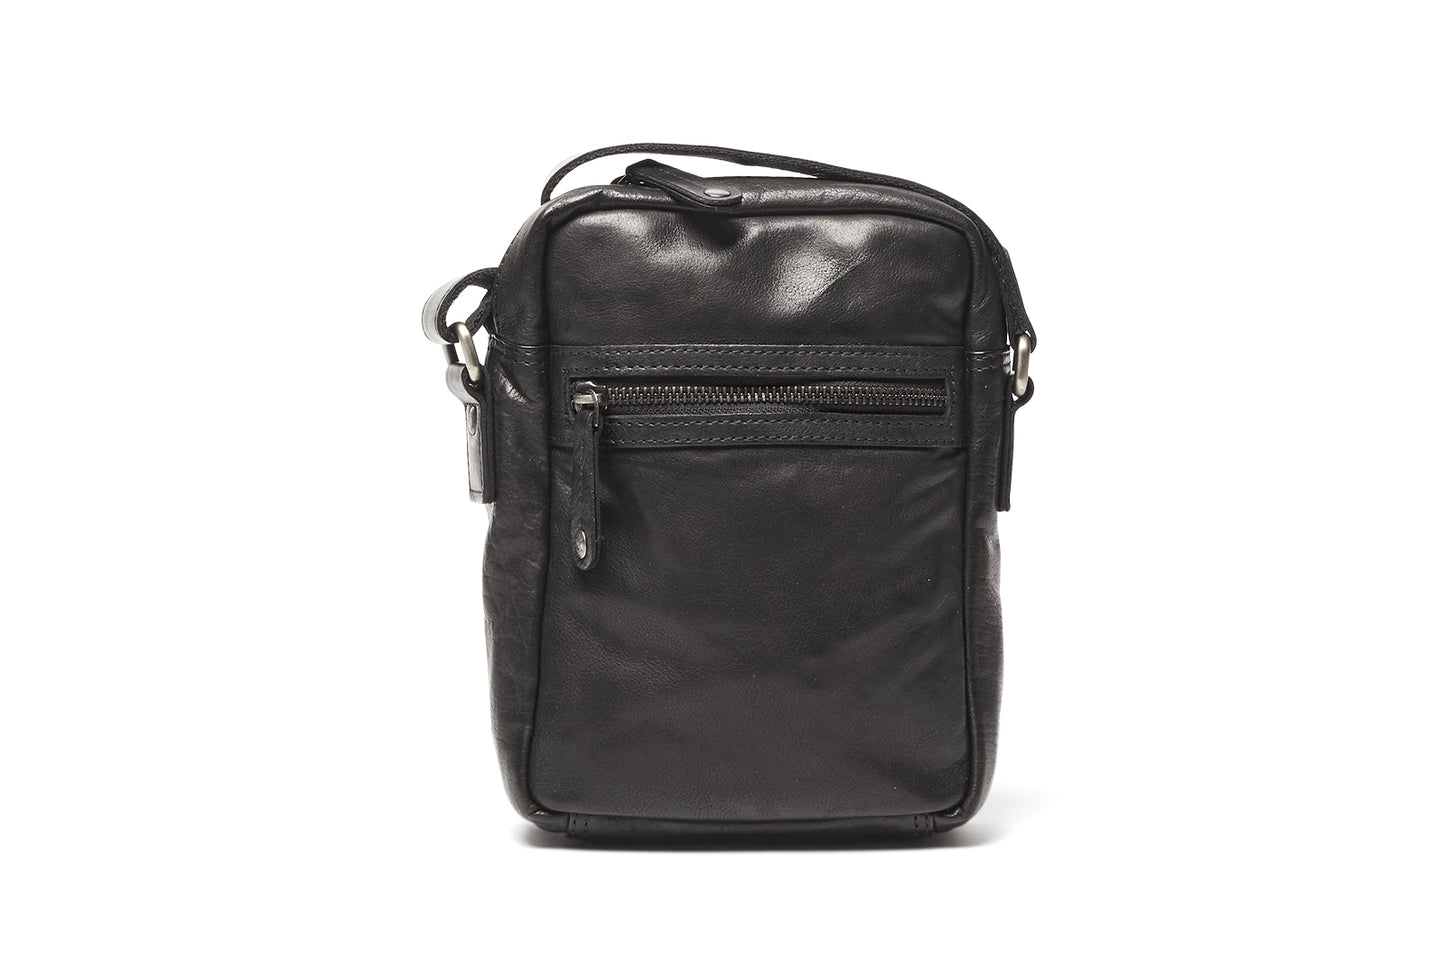 Rugged Hide RH-2624 Copenhagen small leather satchel bag